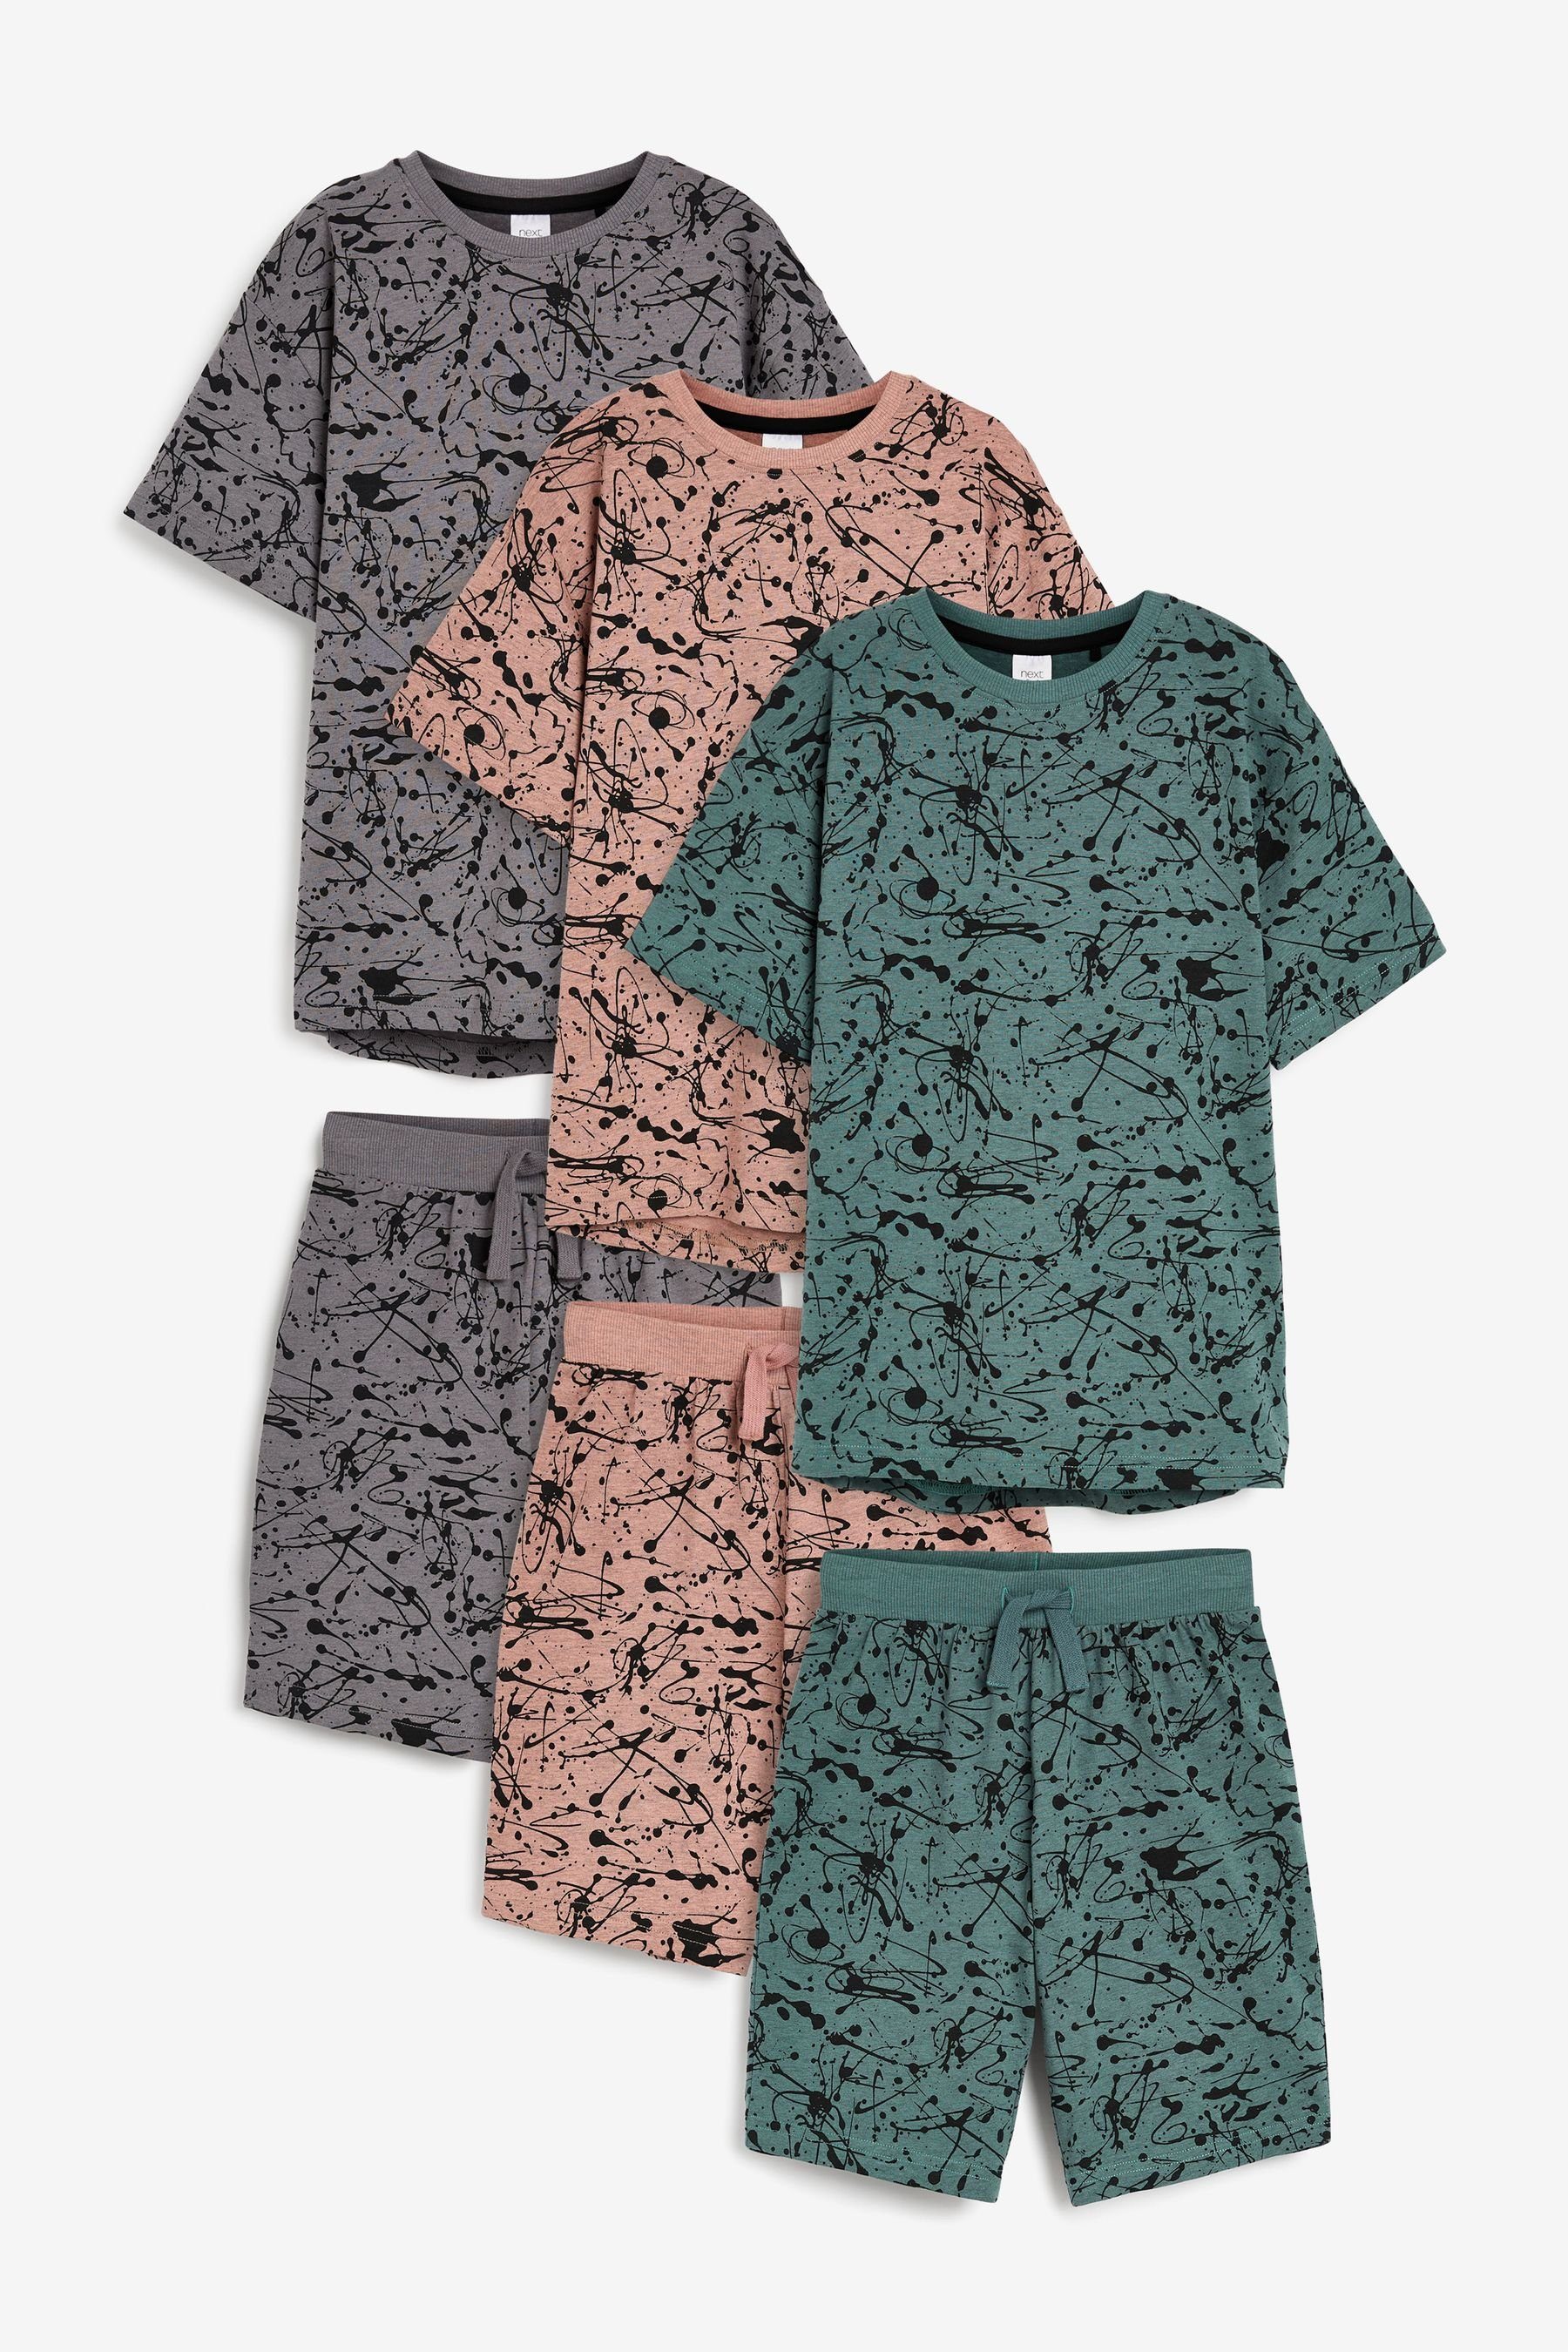 Next Pyjama Kurze Schlafanzüge, 3er-Pack (6 tlg) Teal/Grey Splat Oversized